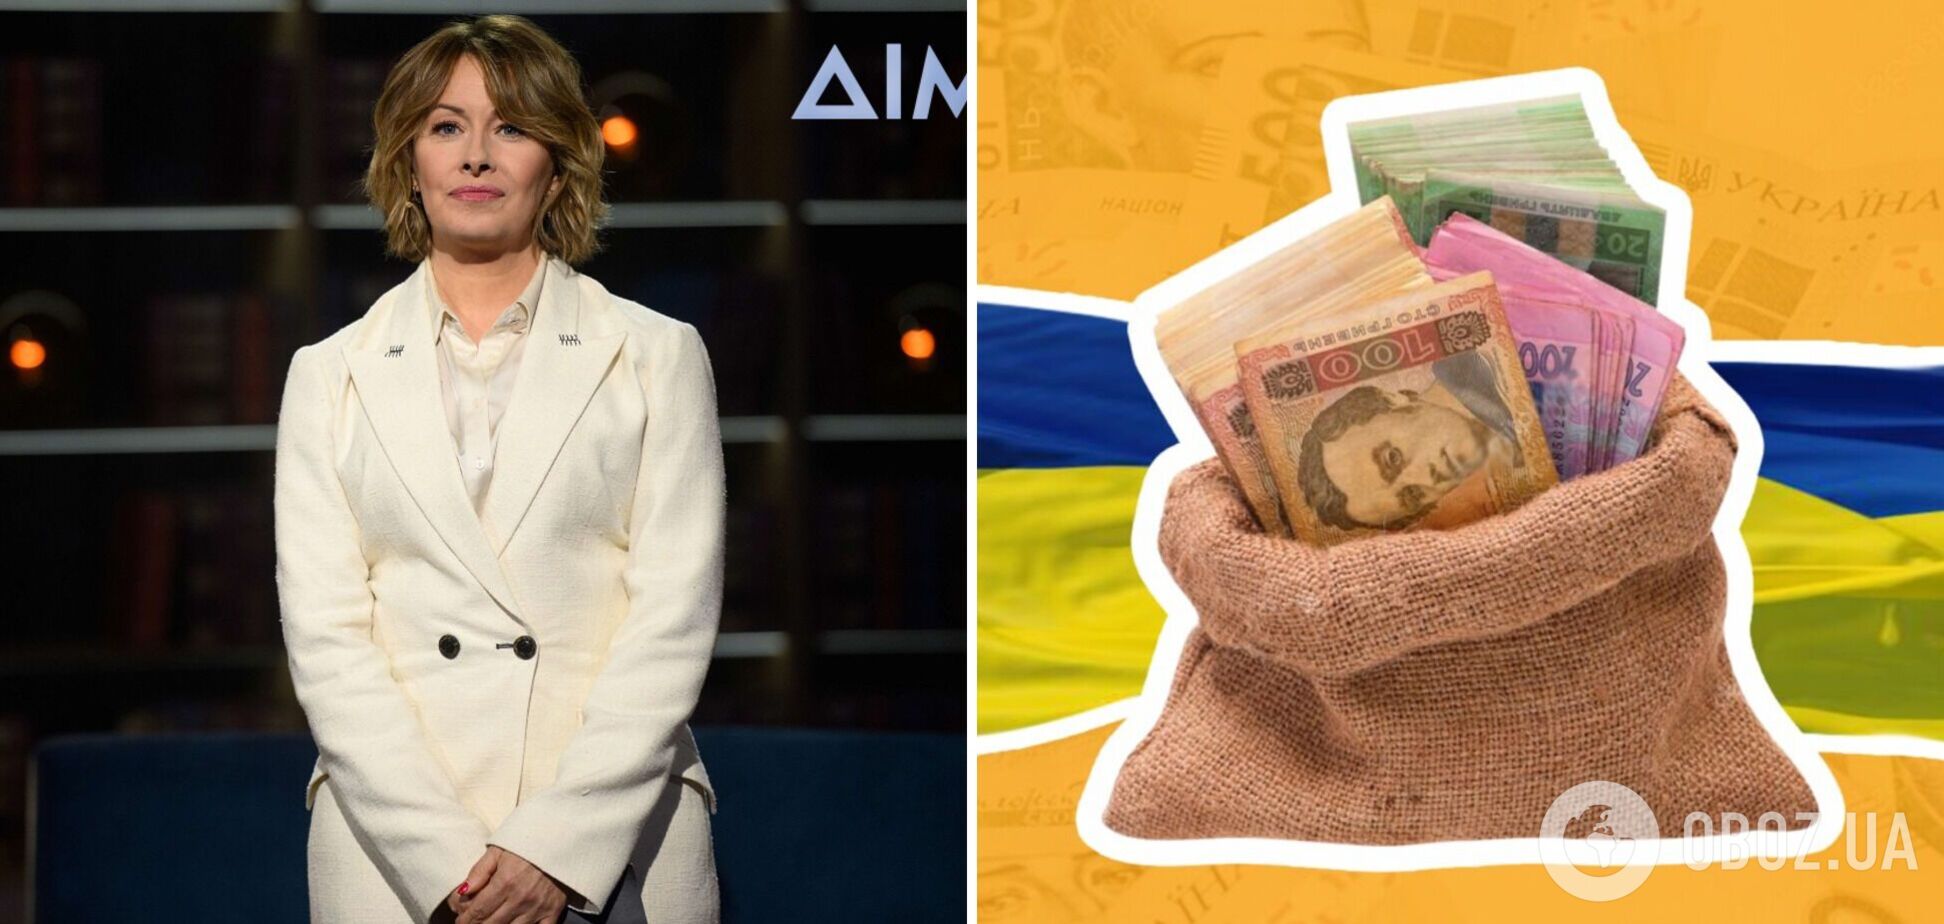 27 млн гривен на шоу: Елена Кравец расставила точки над 'і' в скандале с финансированием проекта, который она ведет